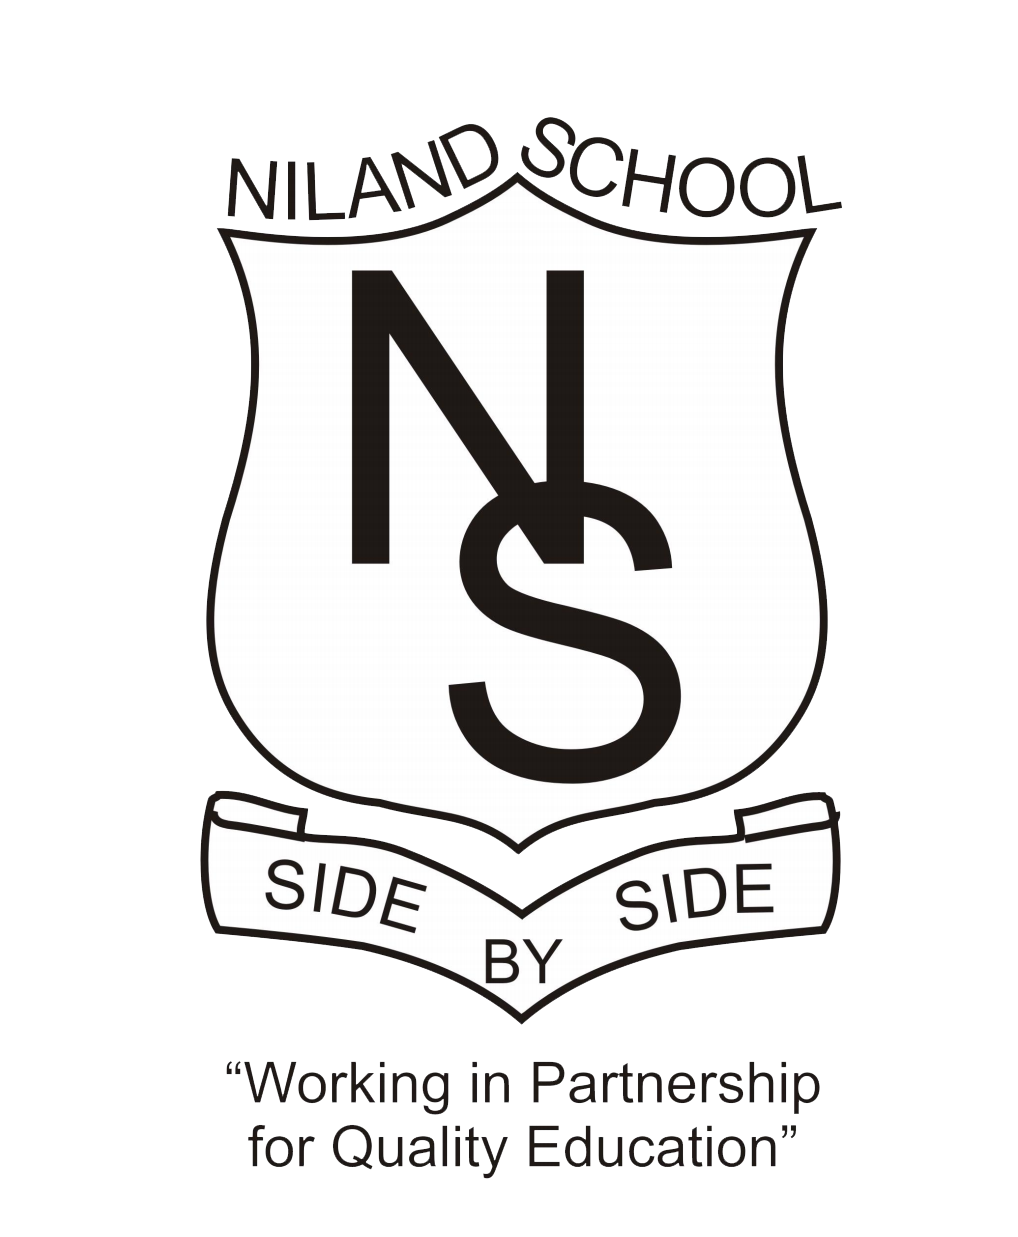 Niland School logo